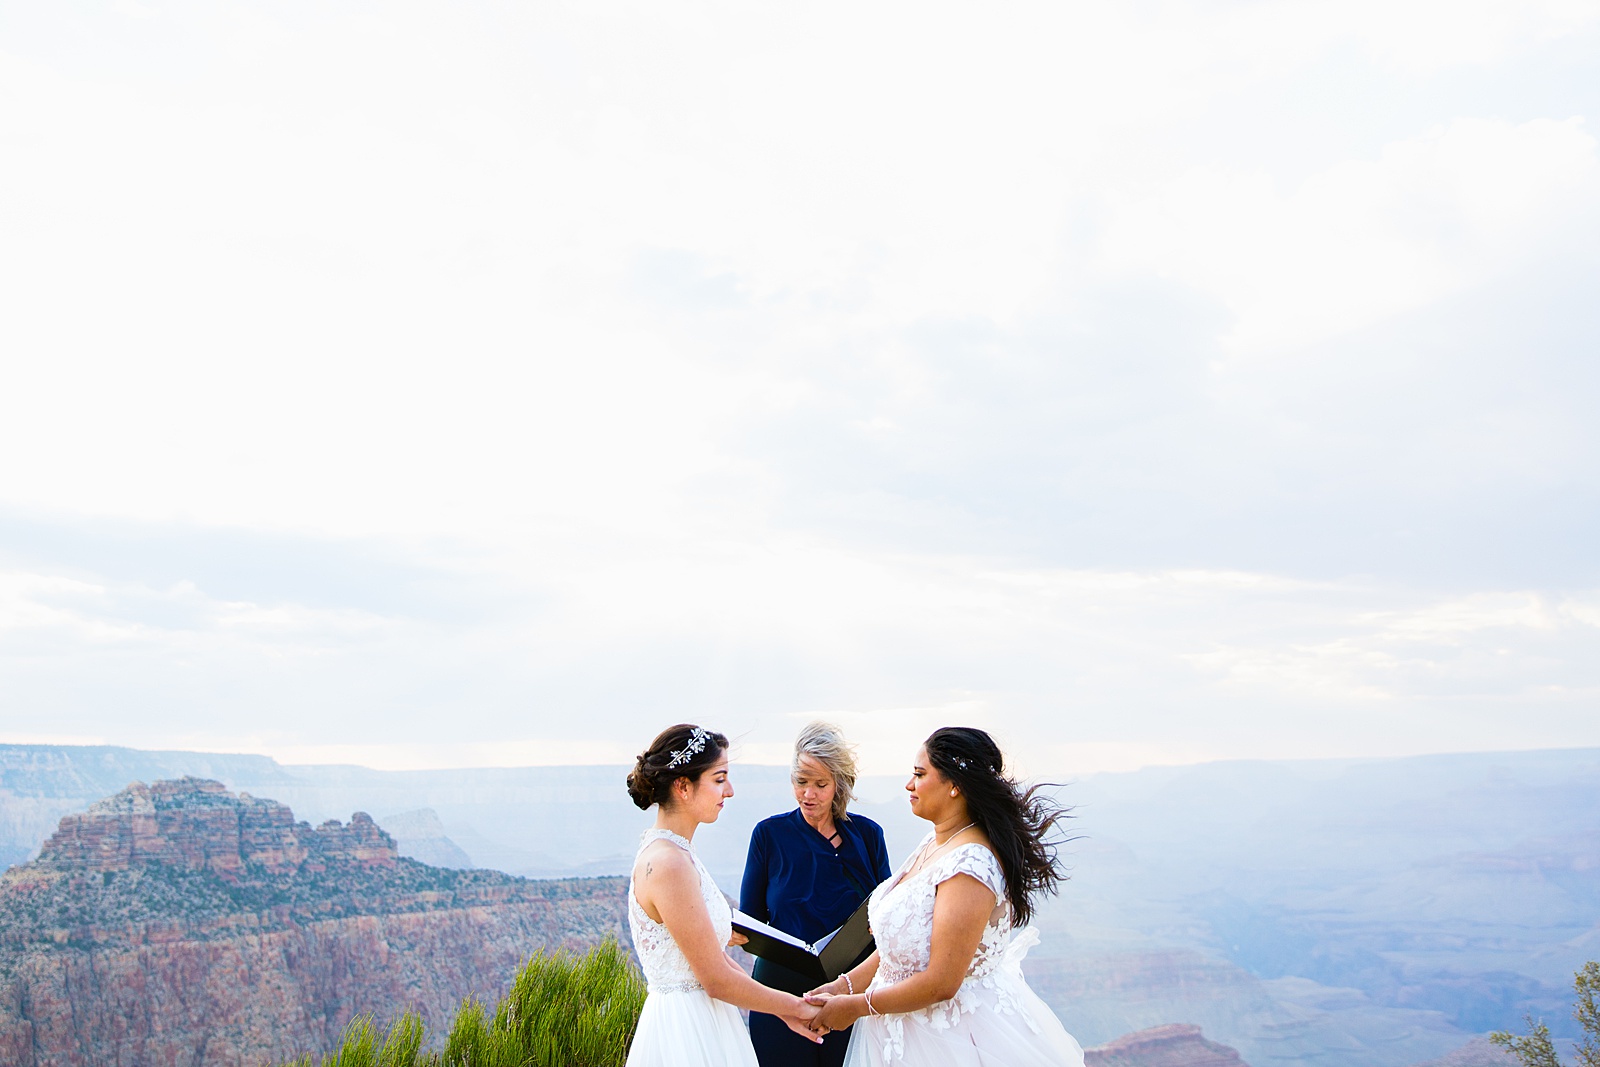 LGBTQ+ wedding ceremony at Moran Point, Grand Canyon by Arizona elopement photographer PMA Photography.